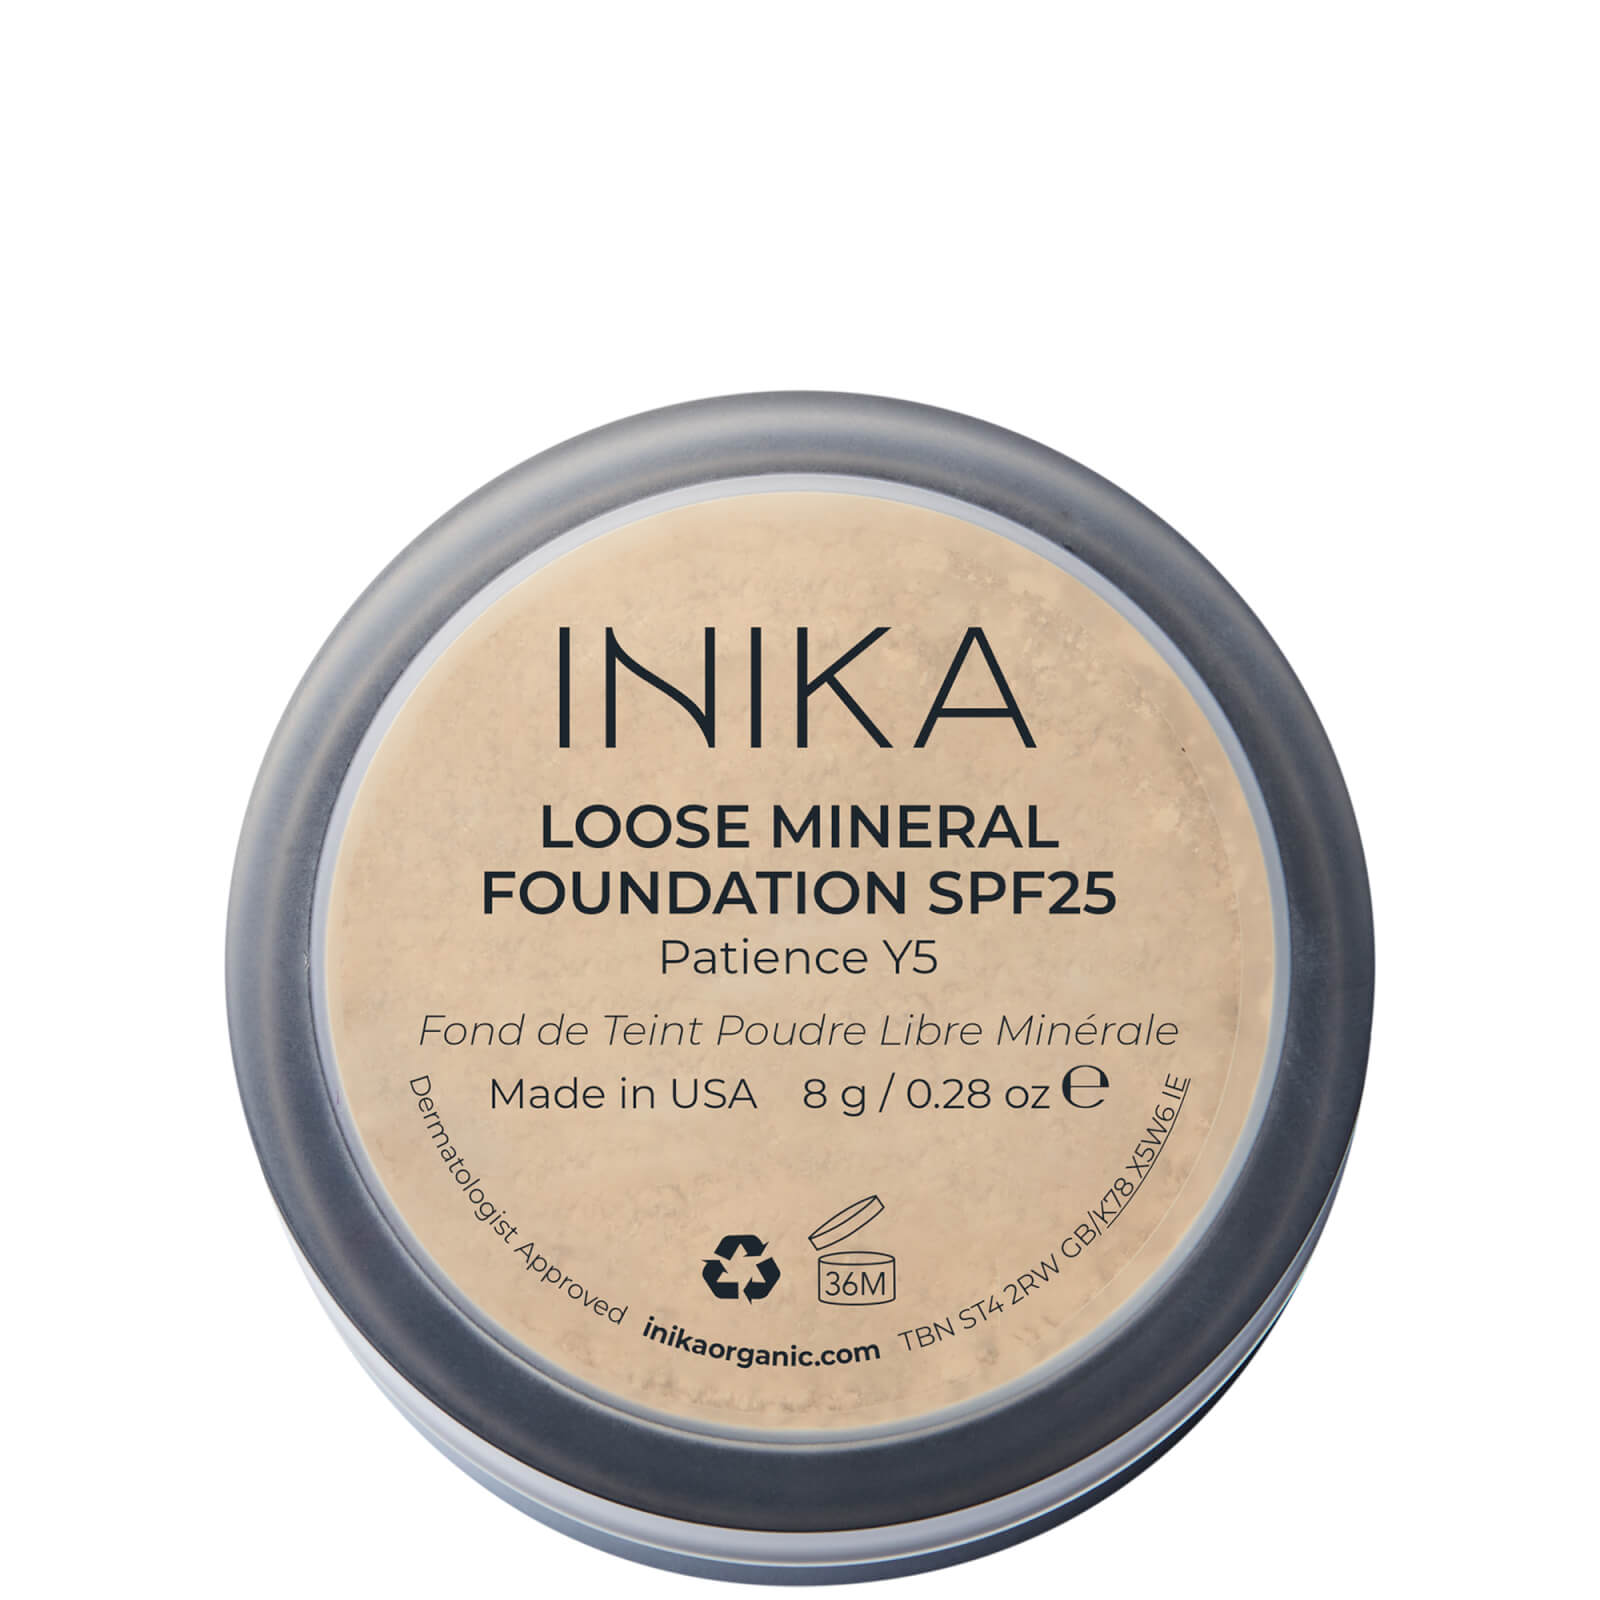 INIKA Loose Mineral Foundation SPF25 8g (Various Shades) - Patience